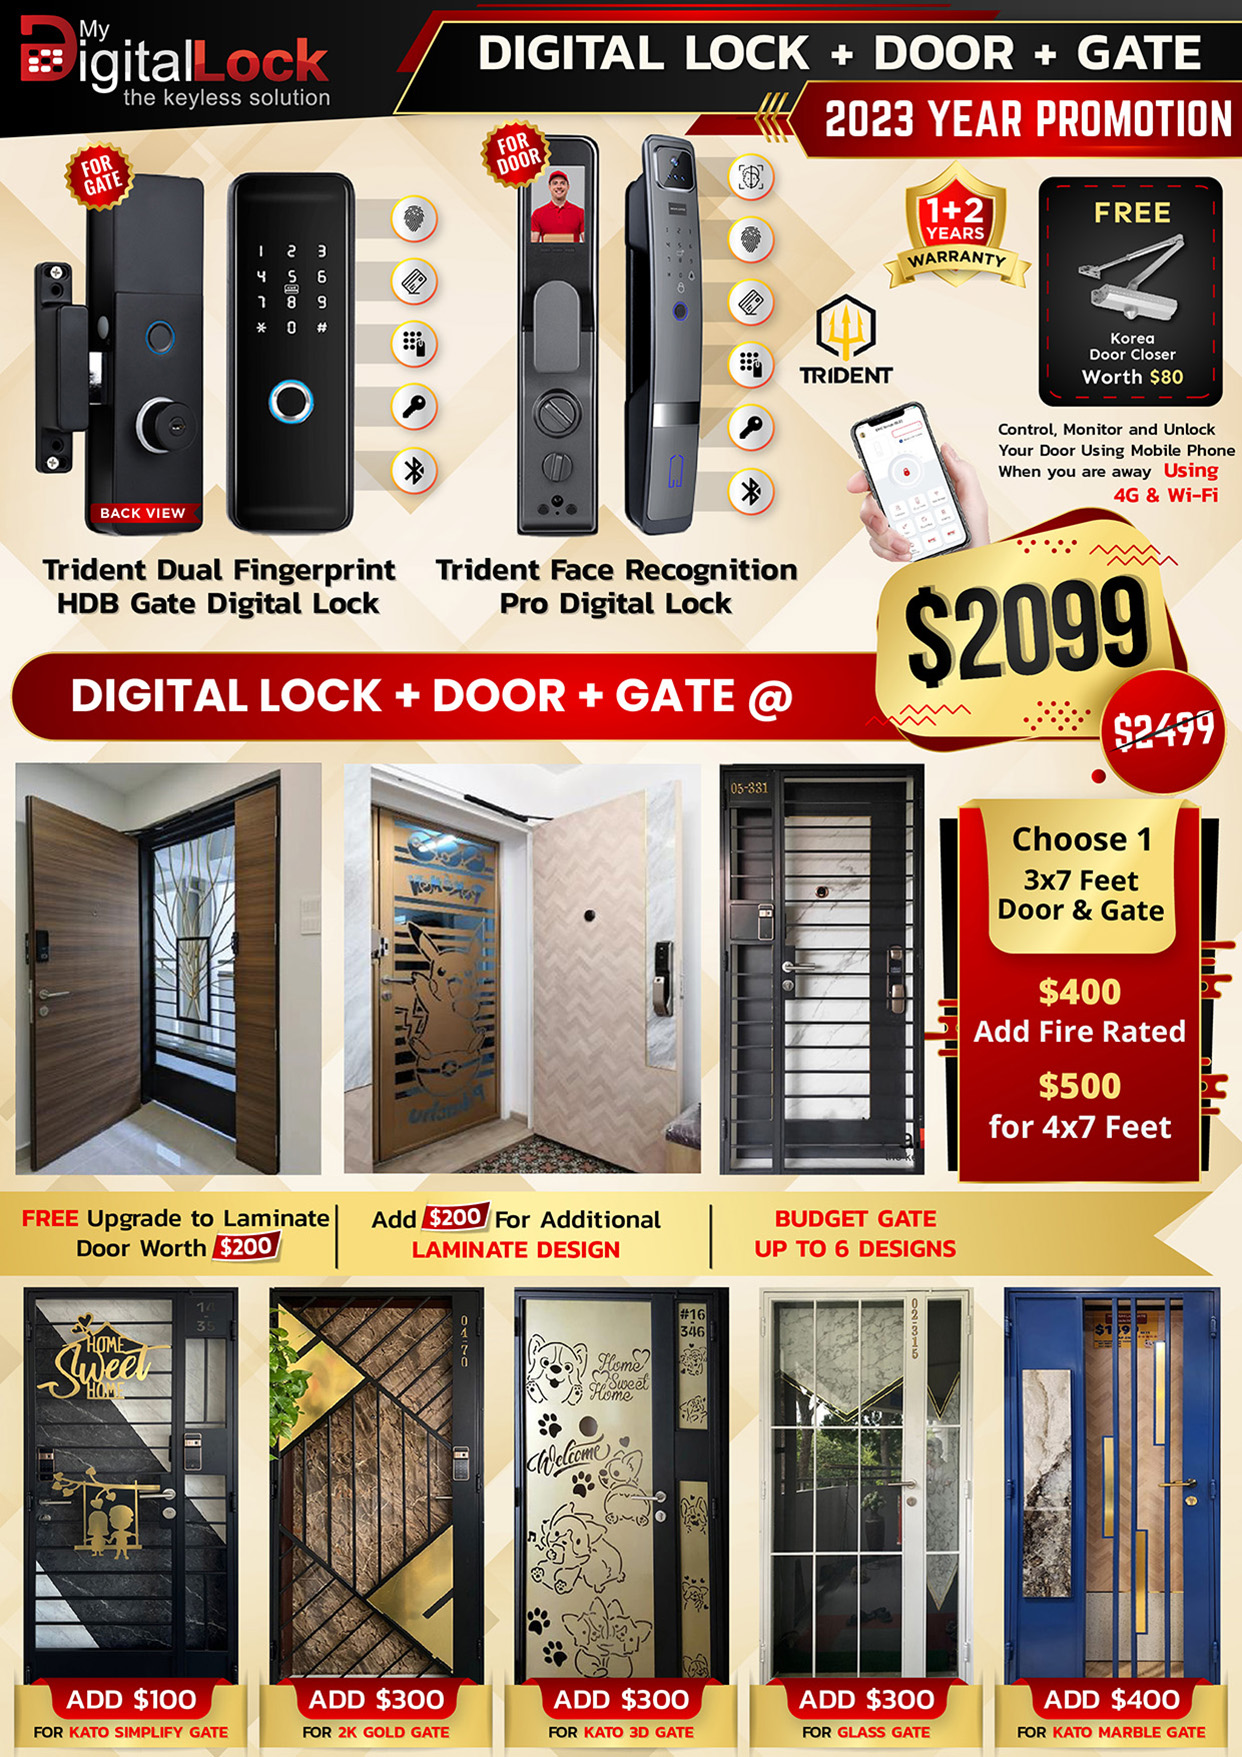 Digitallock-Door-Gate-Promotion-2023-year-Promotion.